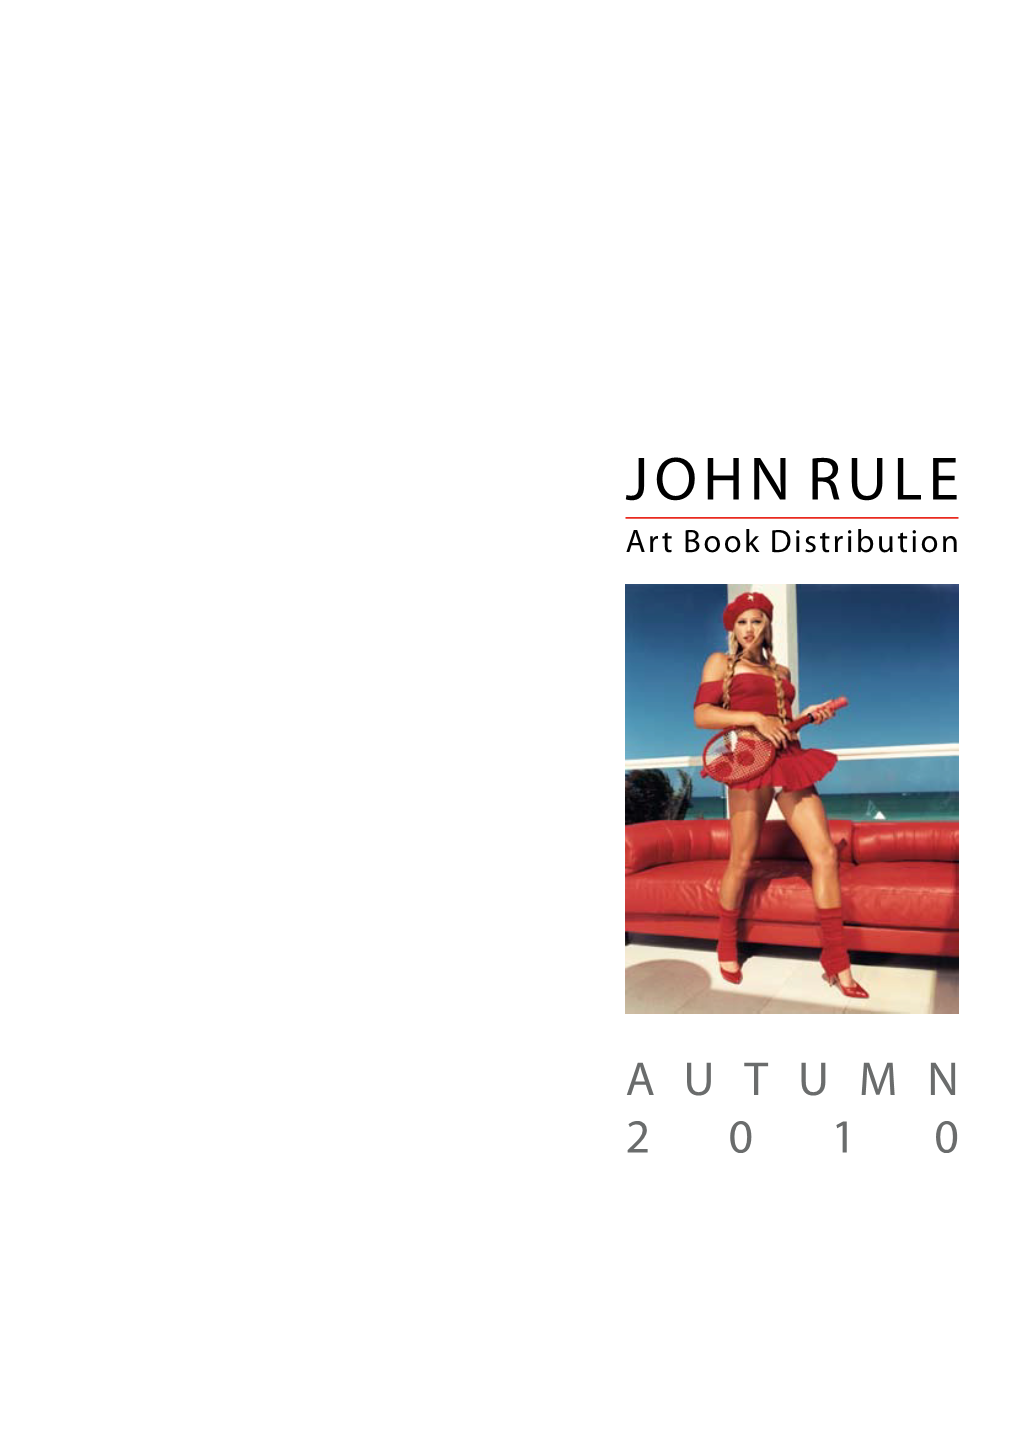 JOHN RULE Art Book Distribution